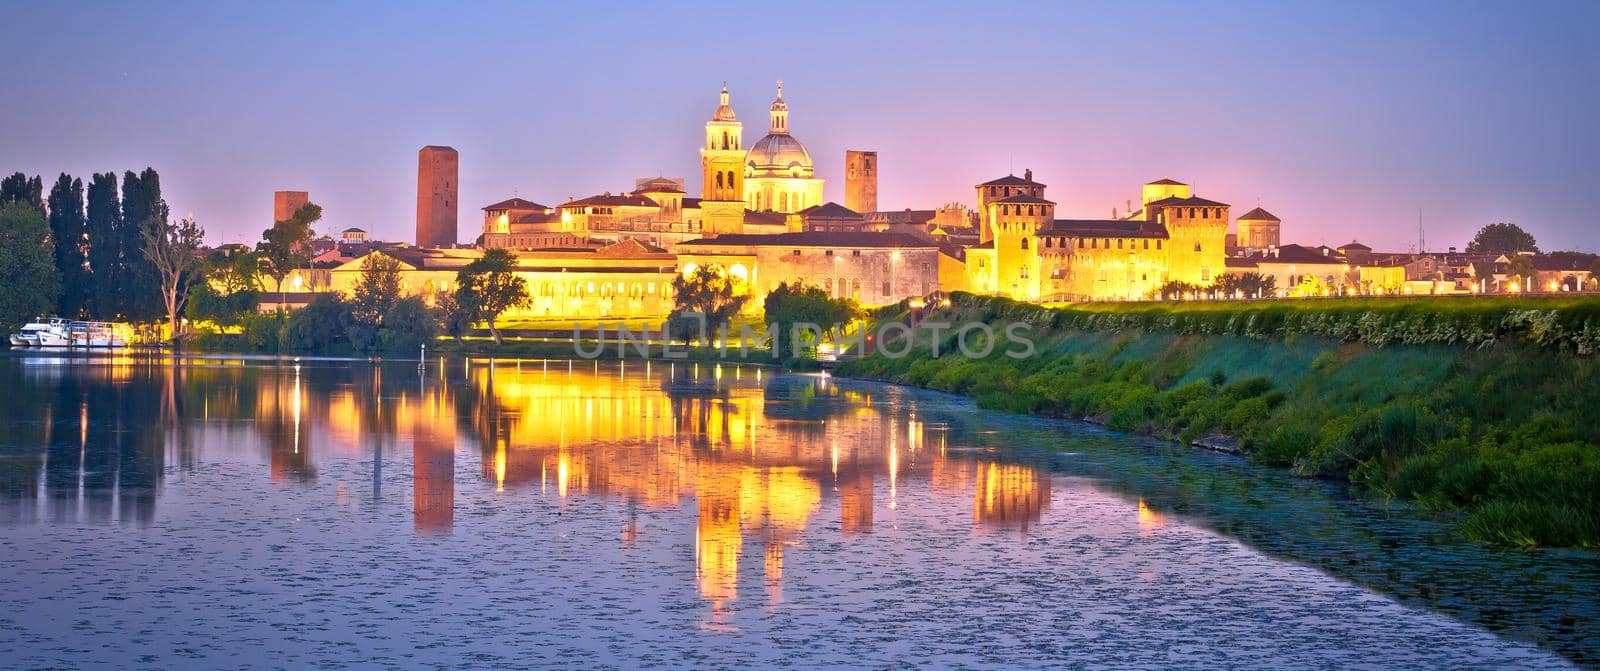 City of Mantova skyline lake reflections dawn view, European capital of culture
